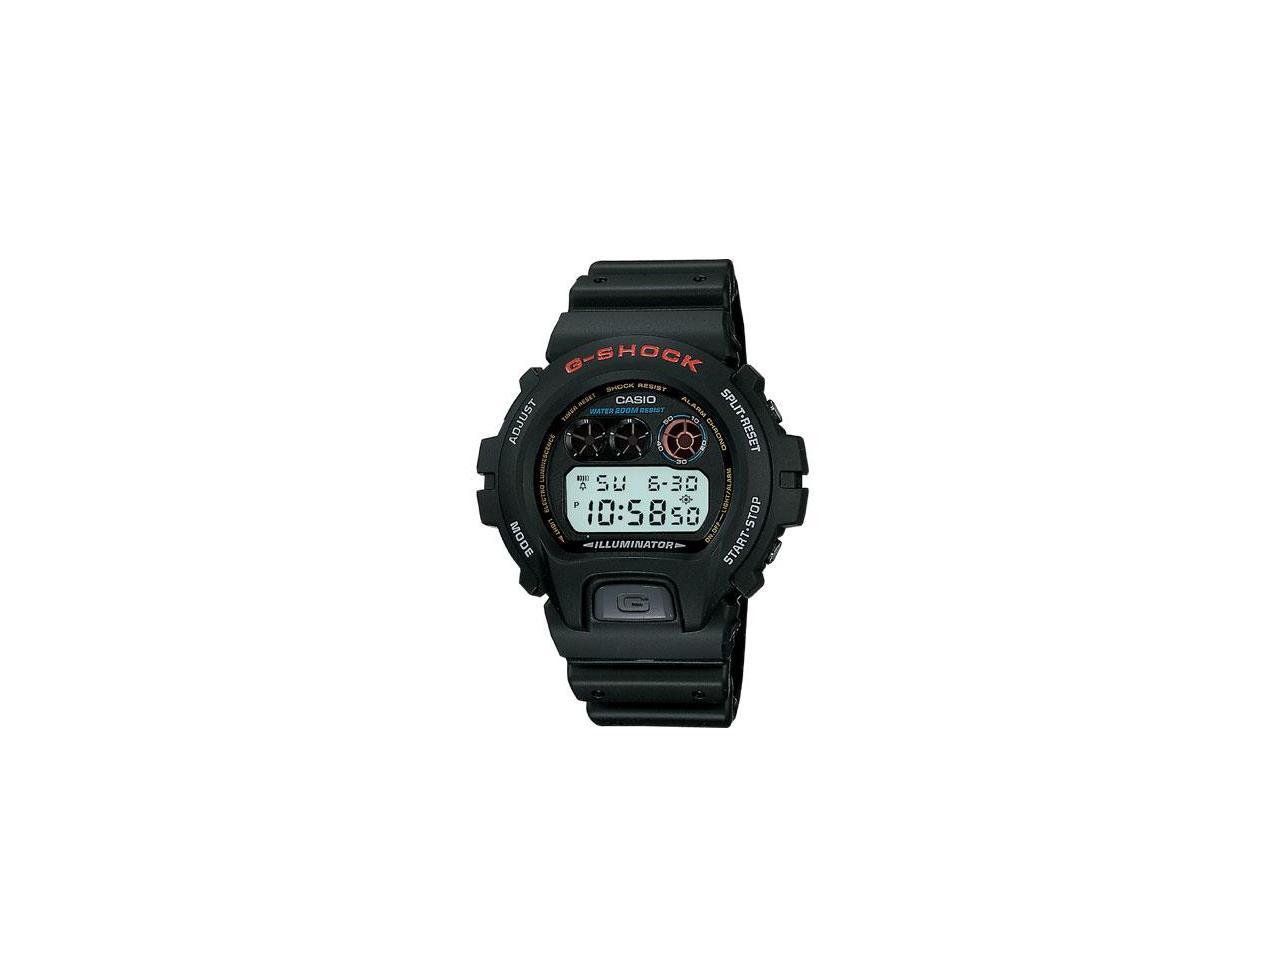 Casio Men's G-Shock Black Classic Digital Watch DW6900-1V - image 4 of 5